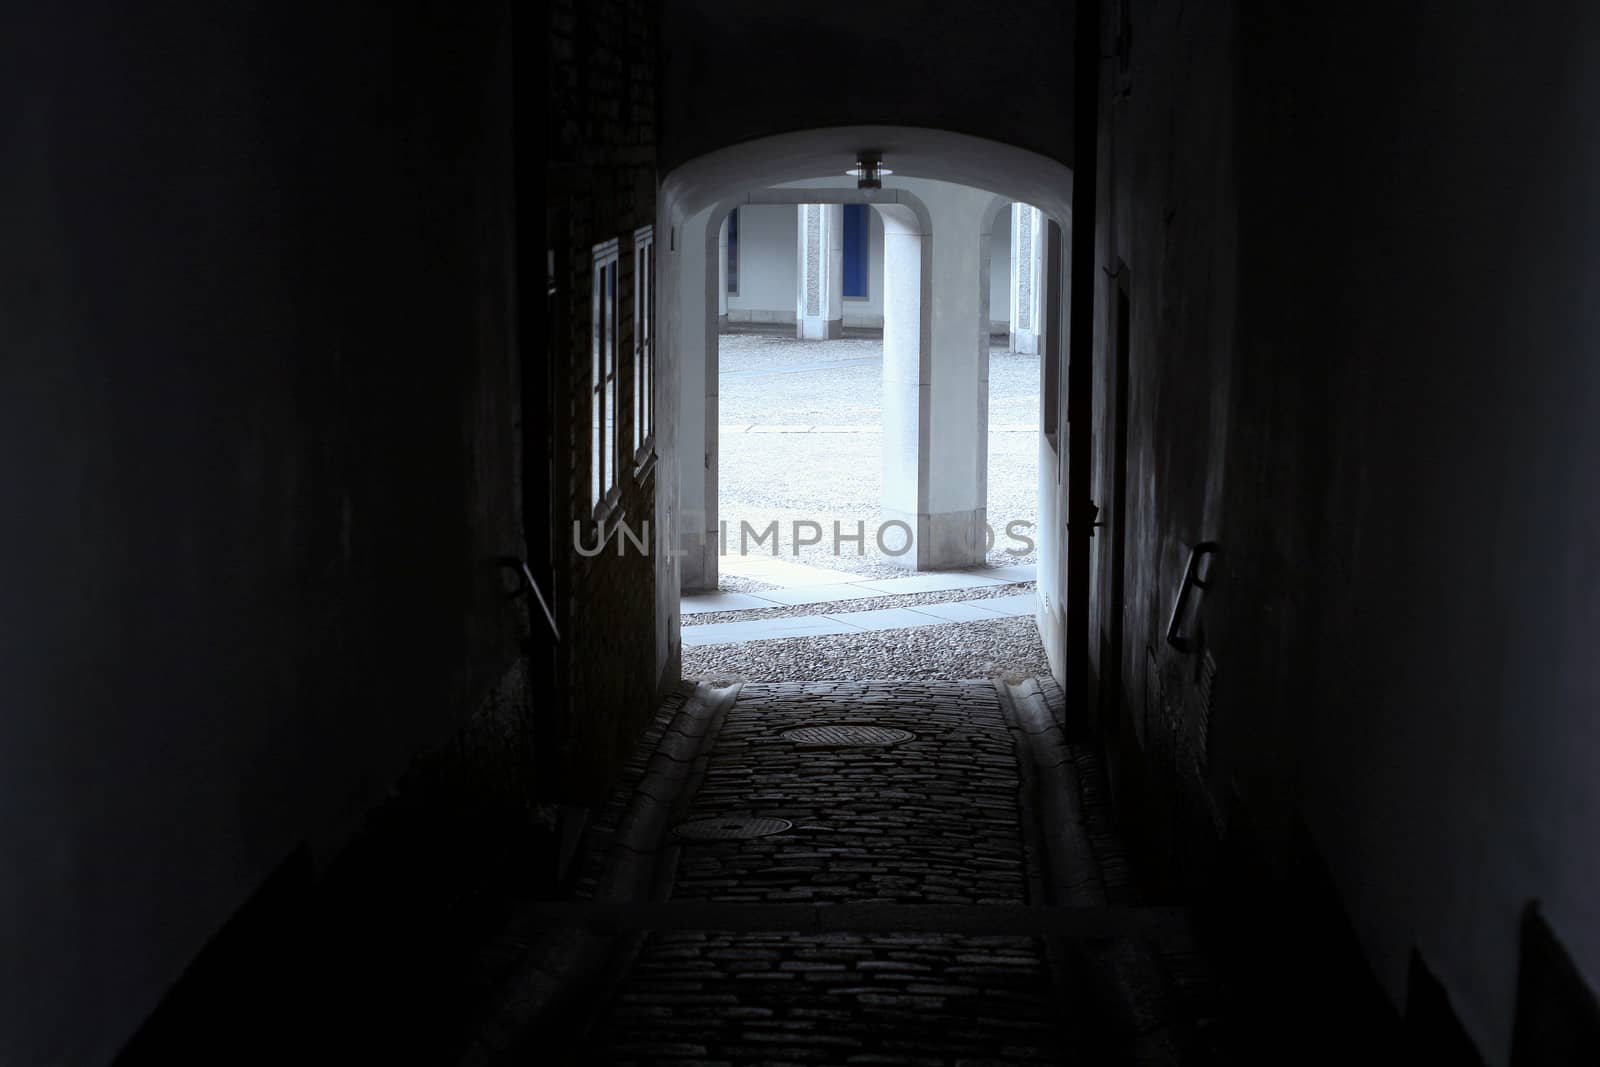 Doorway and a passage